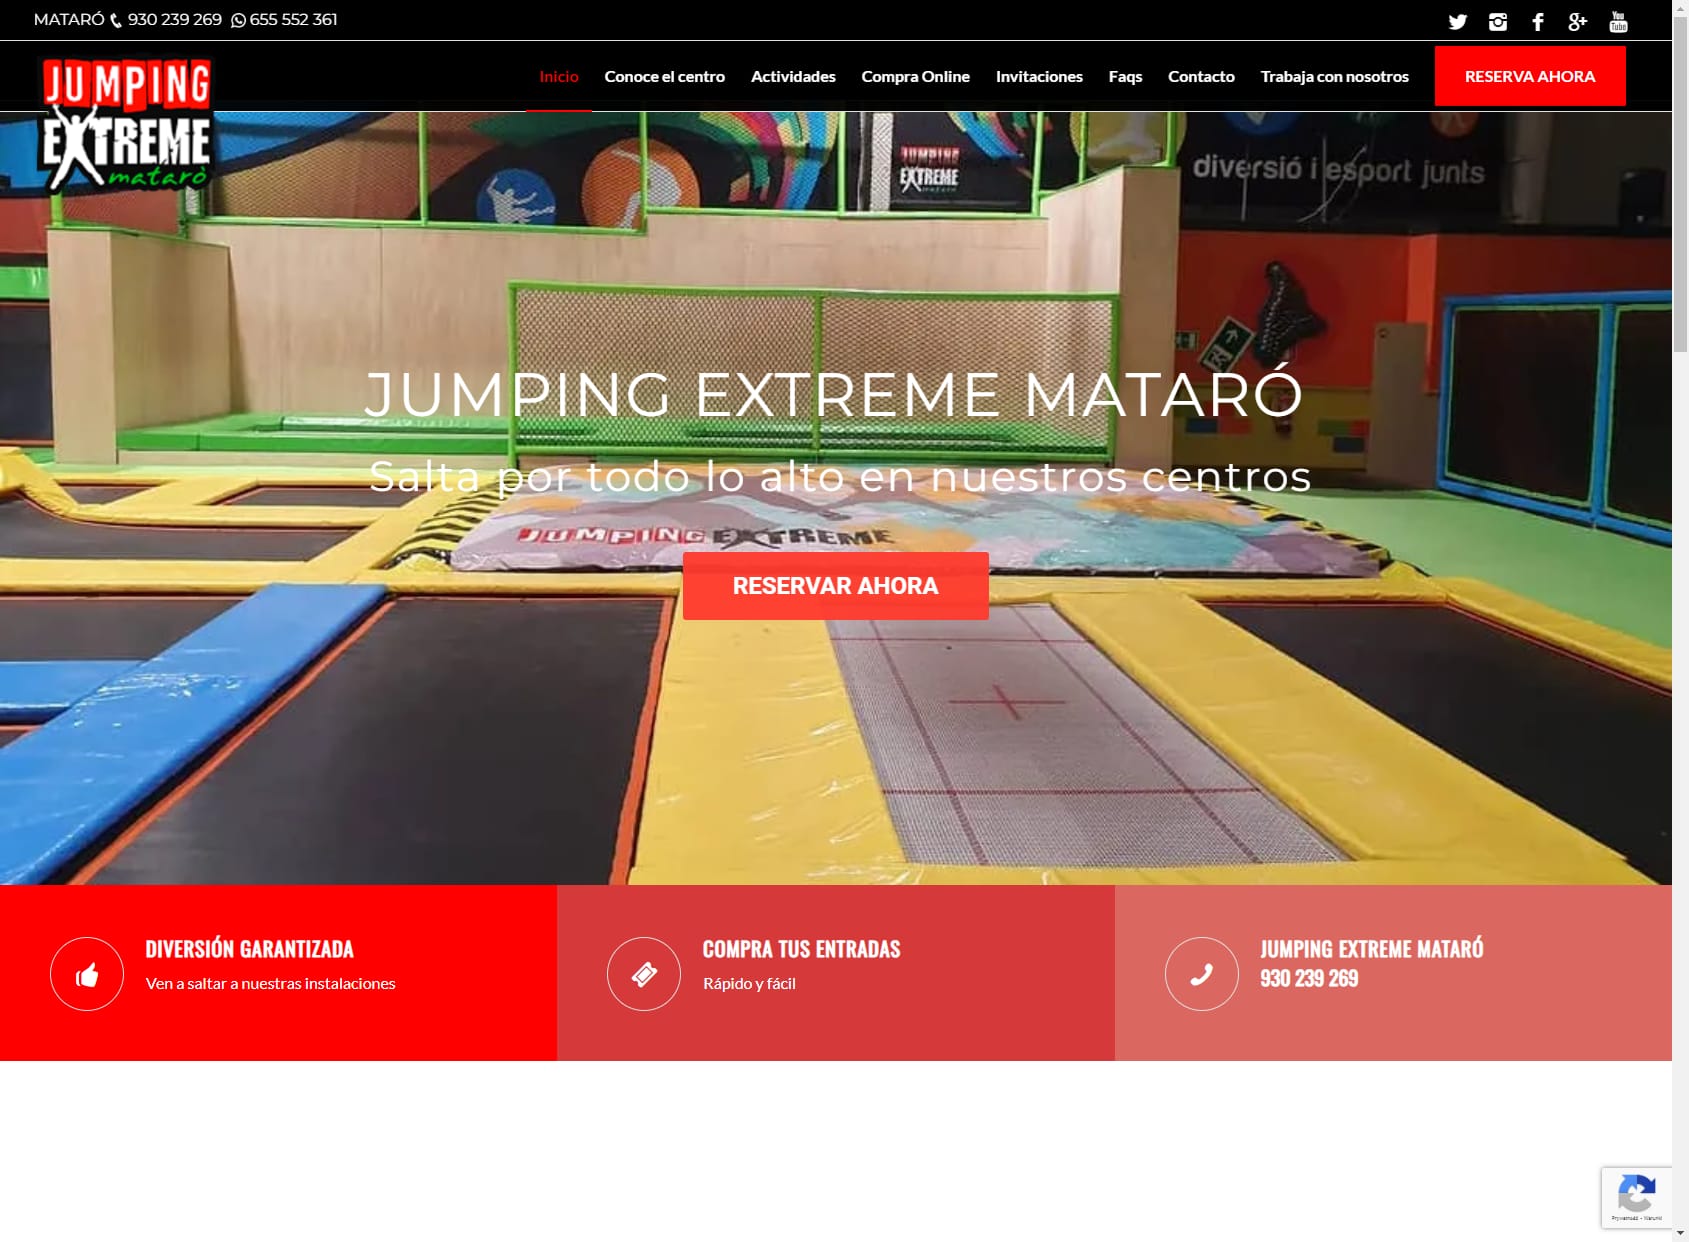 Jumping Extreme Mataró